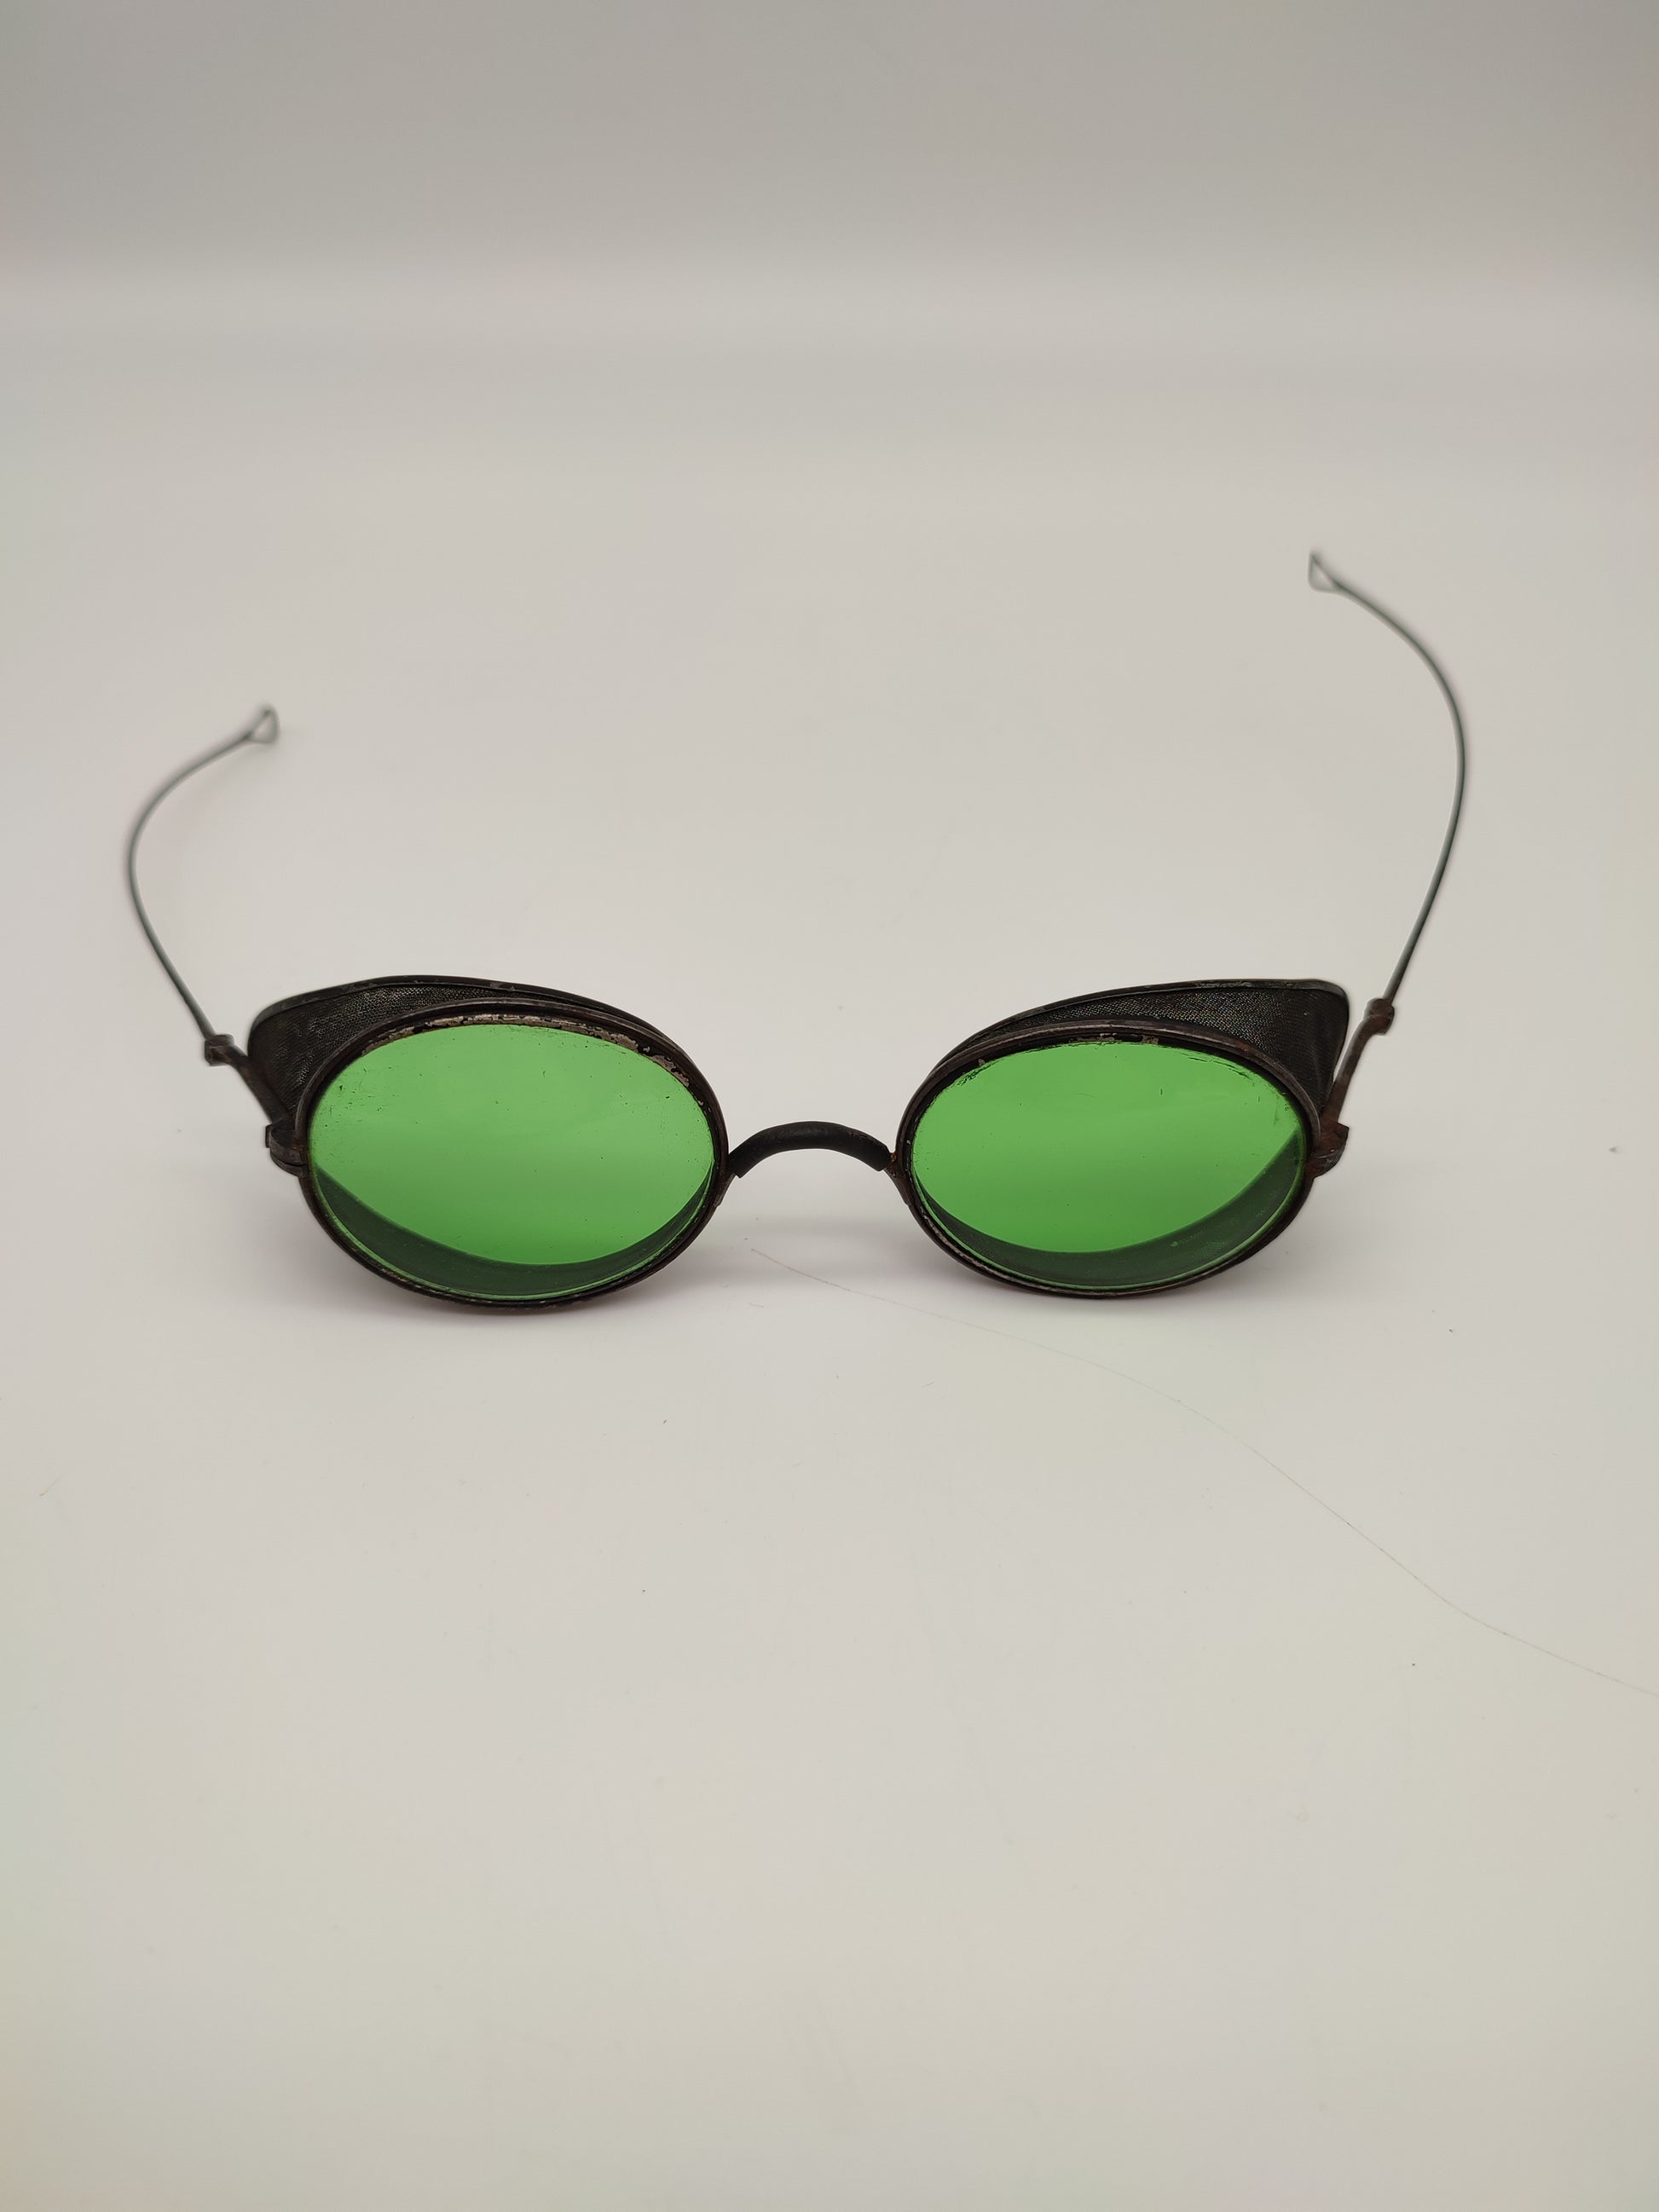 Veri occhiali con lenti vintage sub retrò con lente d'ingrandimento